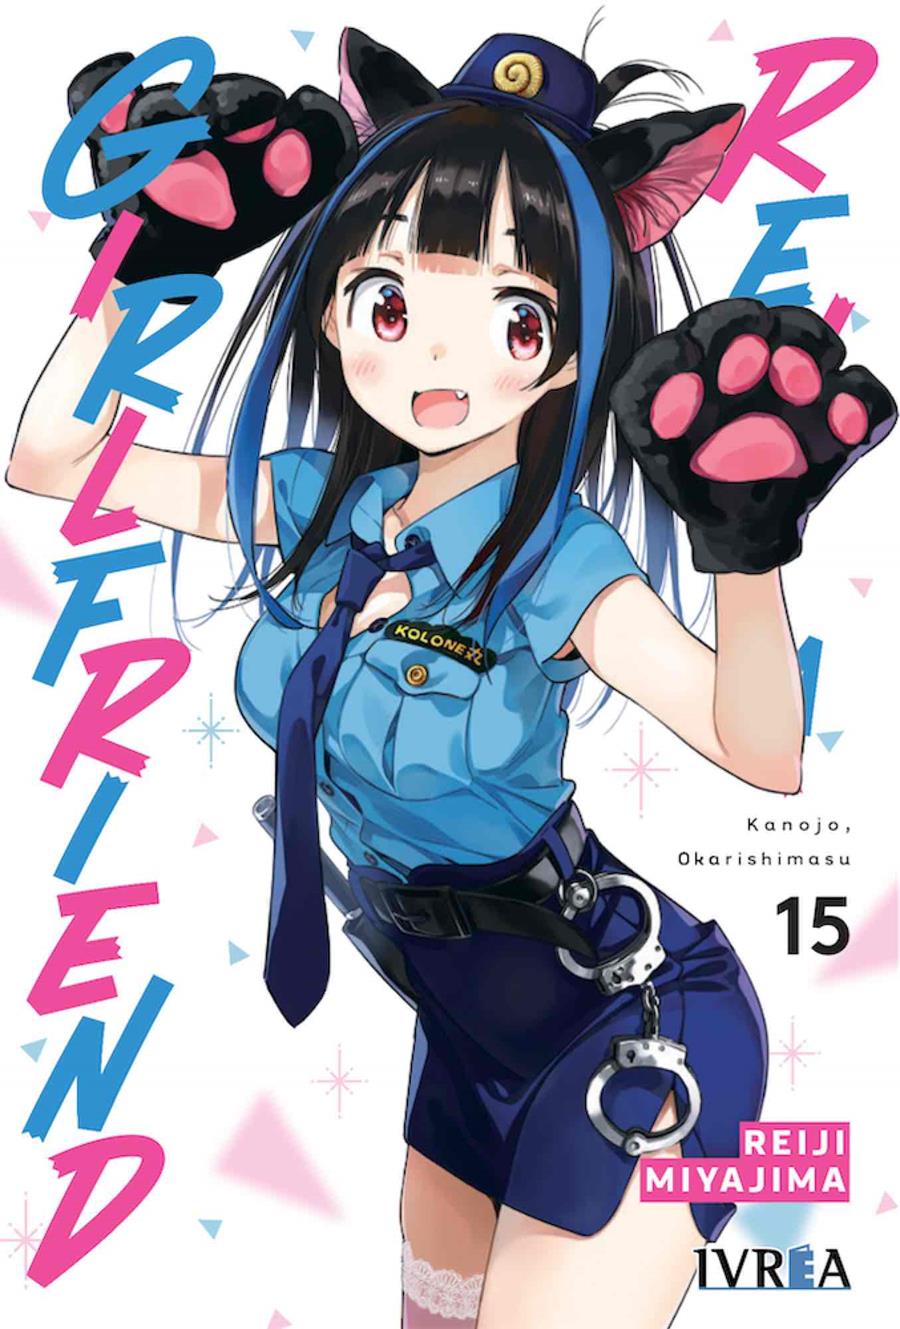 RENT-A-GIRLFRIEND Nº15 [RUSTICA] | MIYAJIMA, REIJI | Akira Comics  - libreria donde comprar comics, juegos y libros online